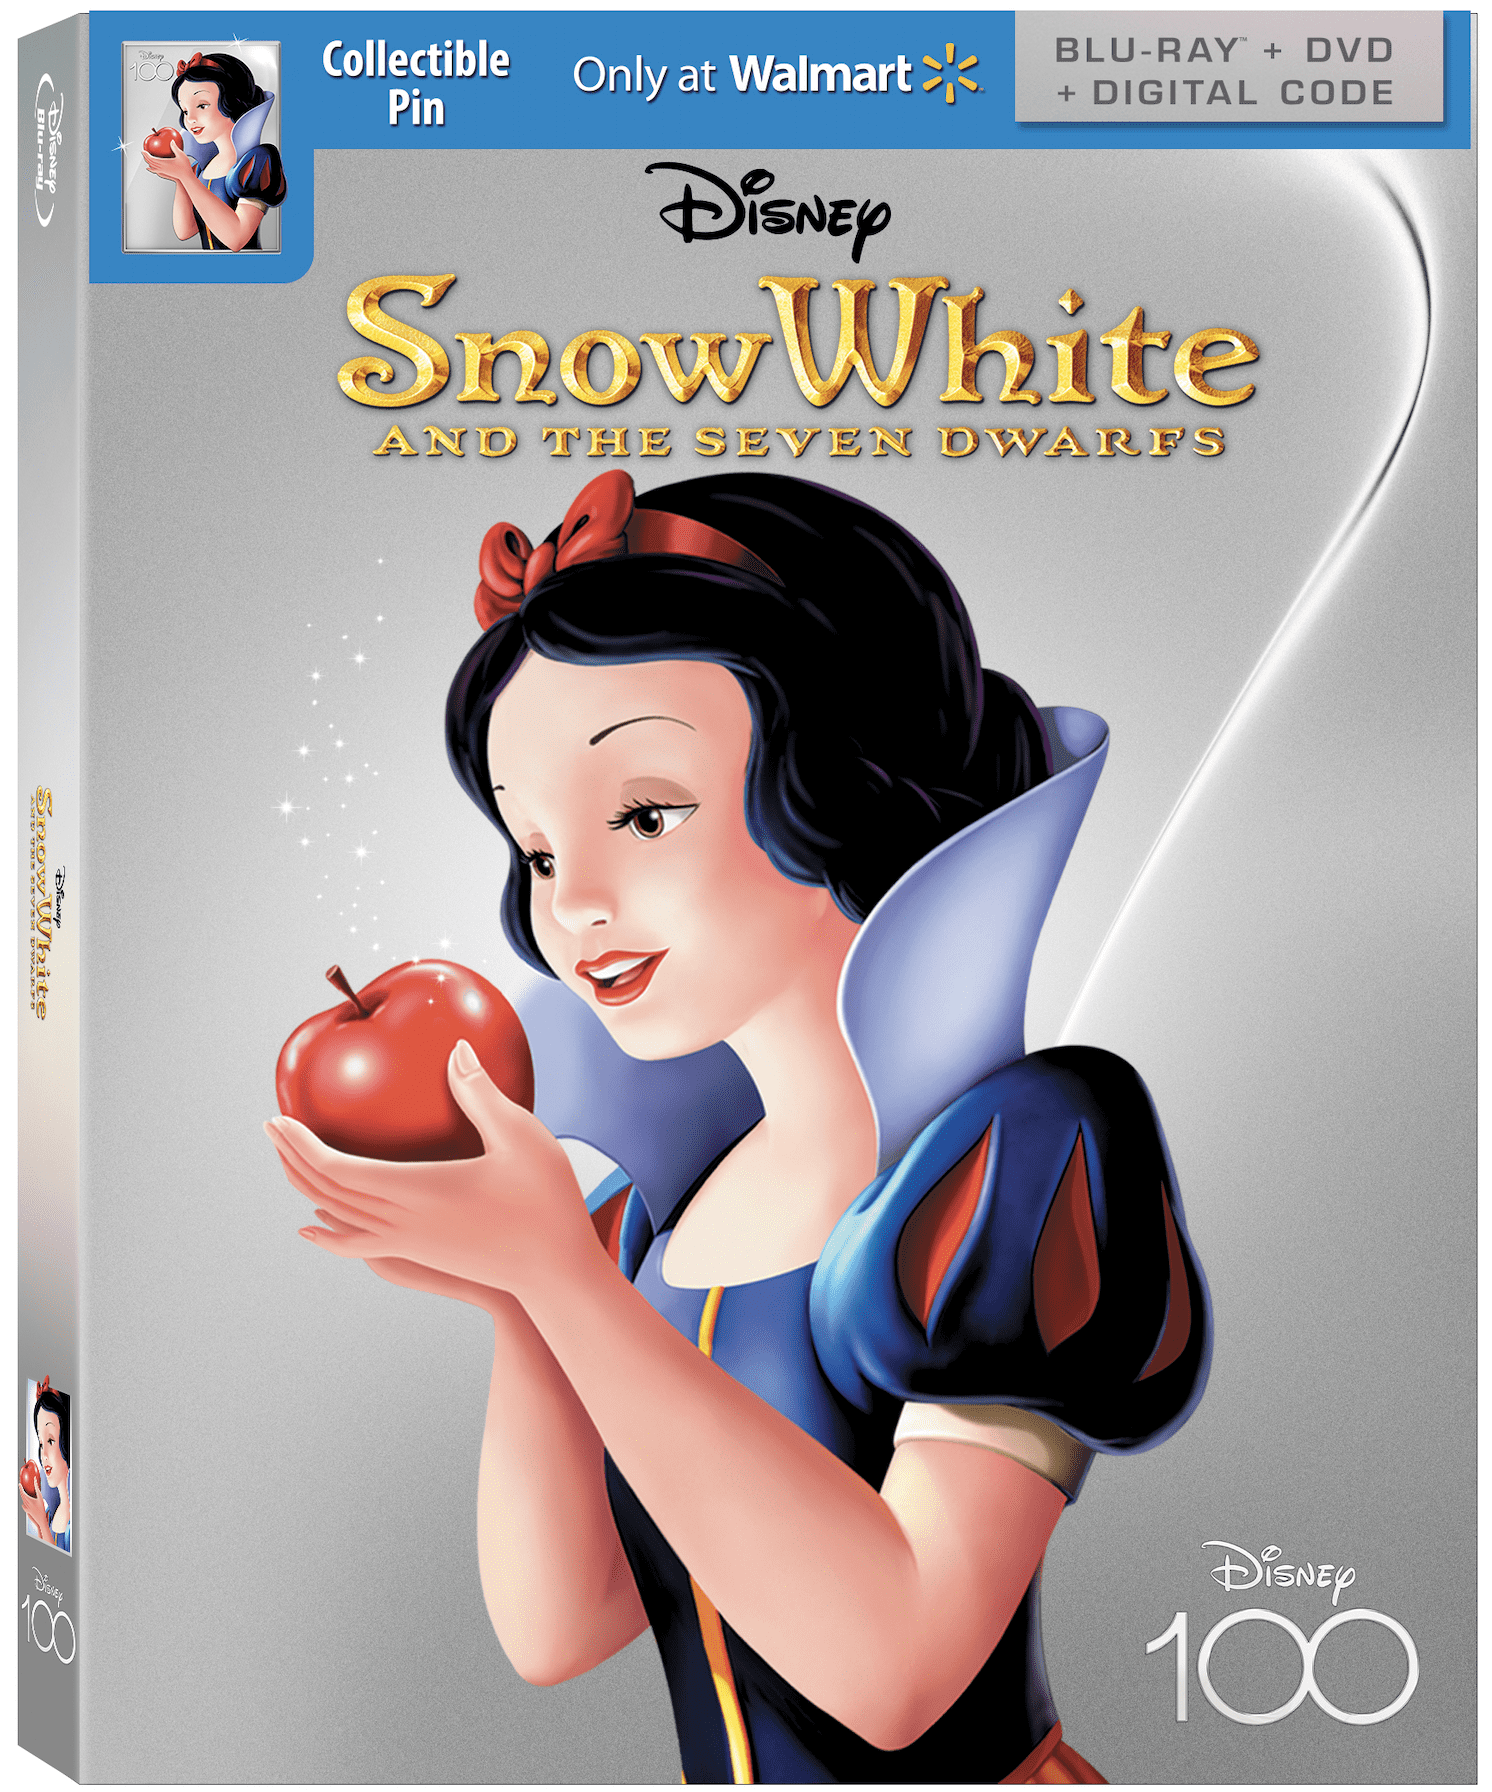 Snow White And The Seven Dwarfs Disney100 Edition Walmart Exclusive Blu Ray Dvd Digital